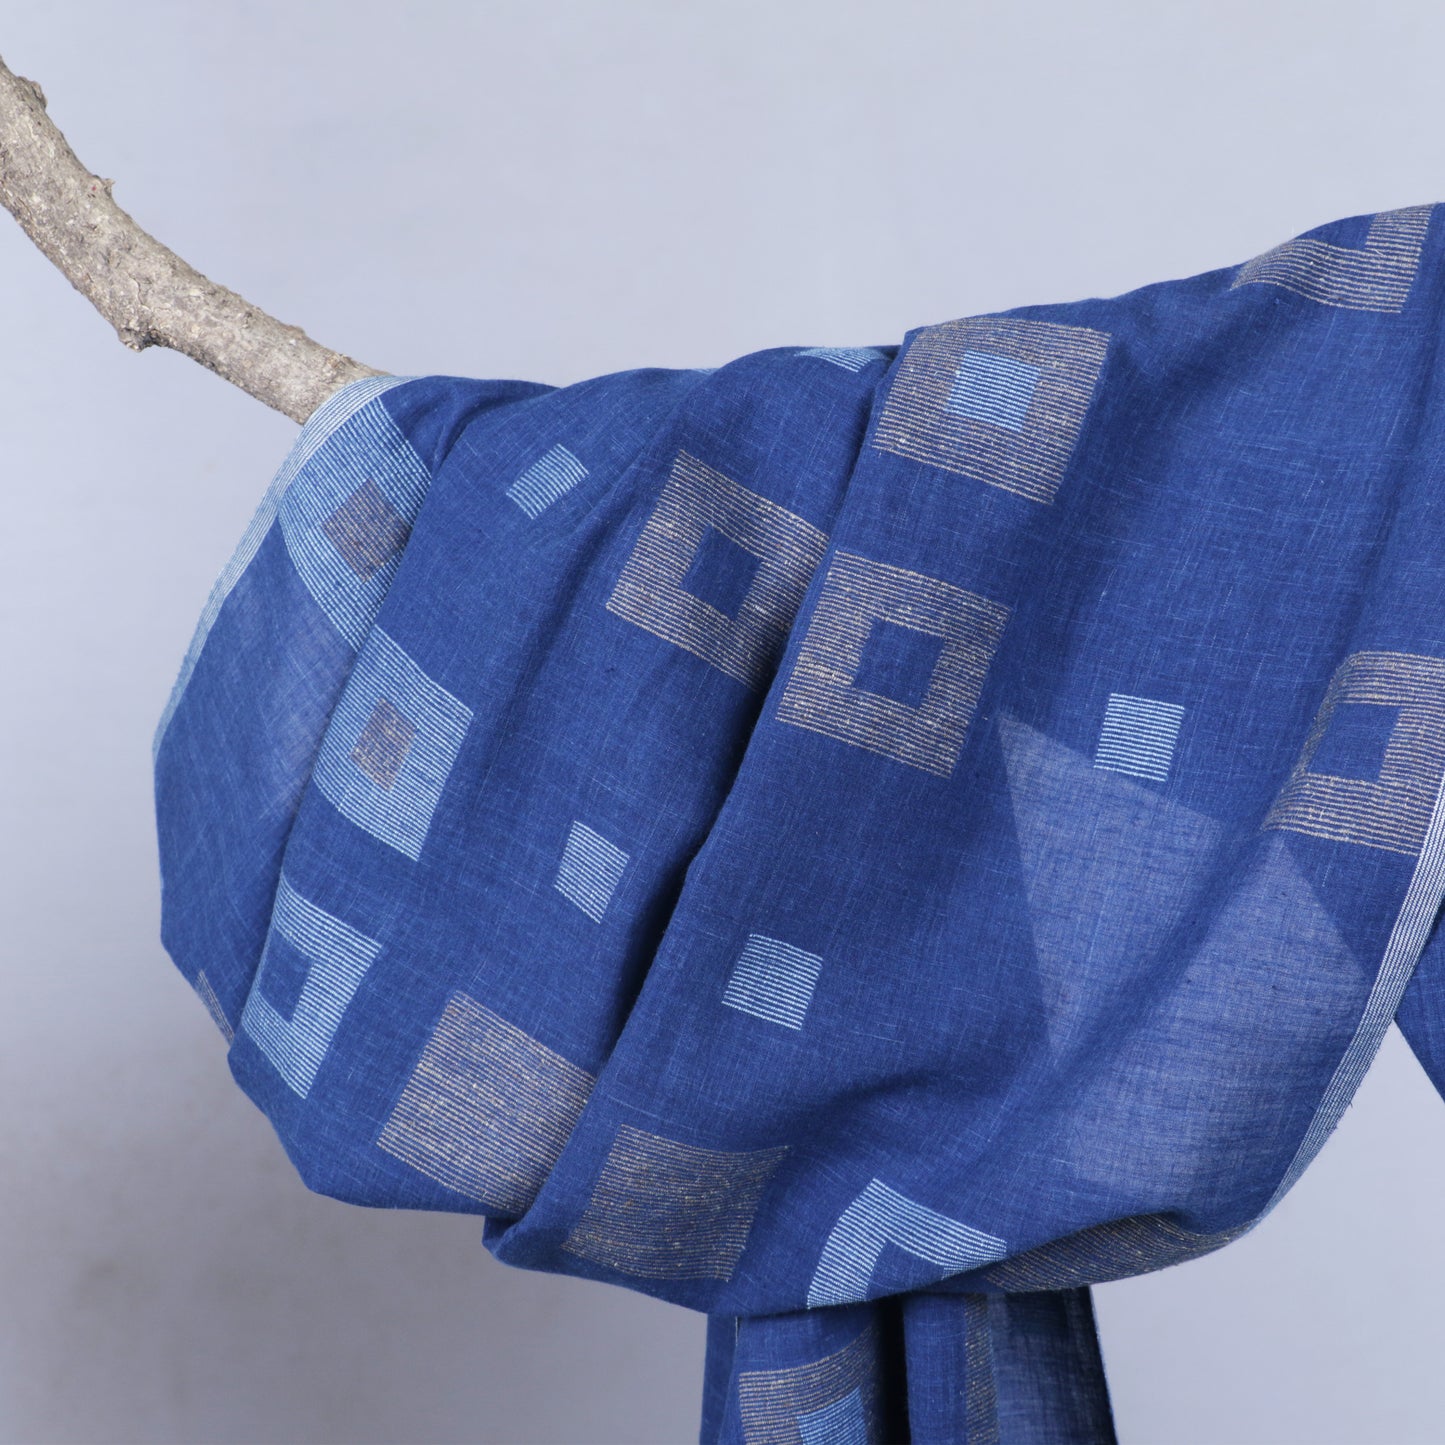 India, Karomi Crafts & Textiles, Indigo Multiple Square Jamdani Stole